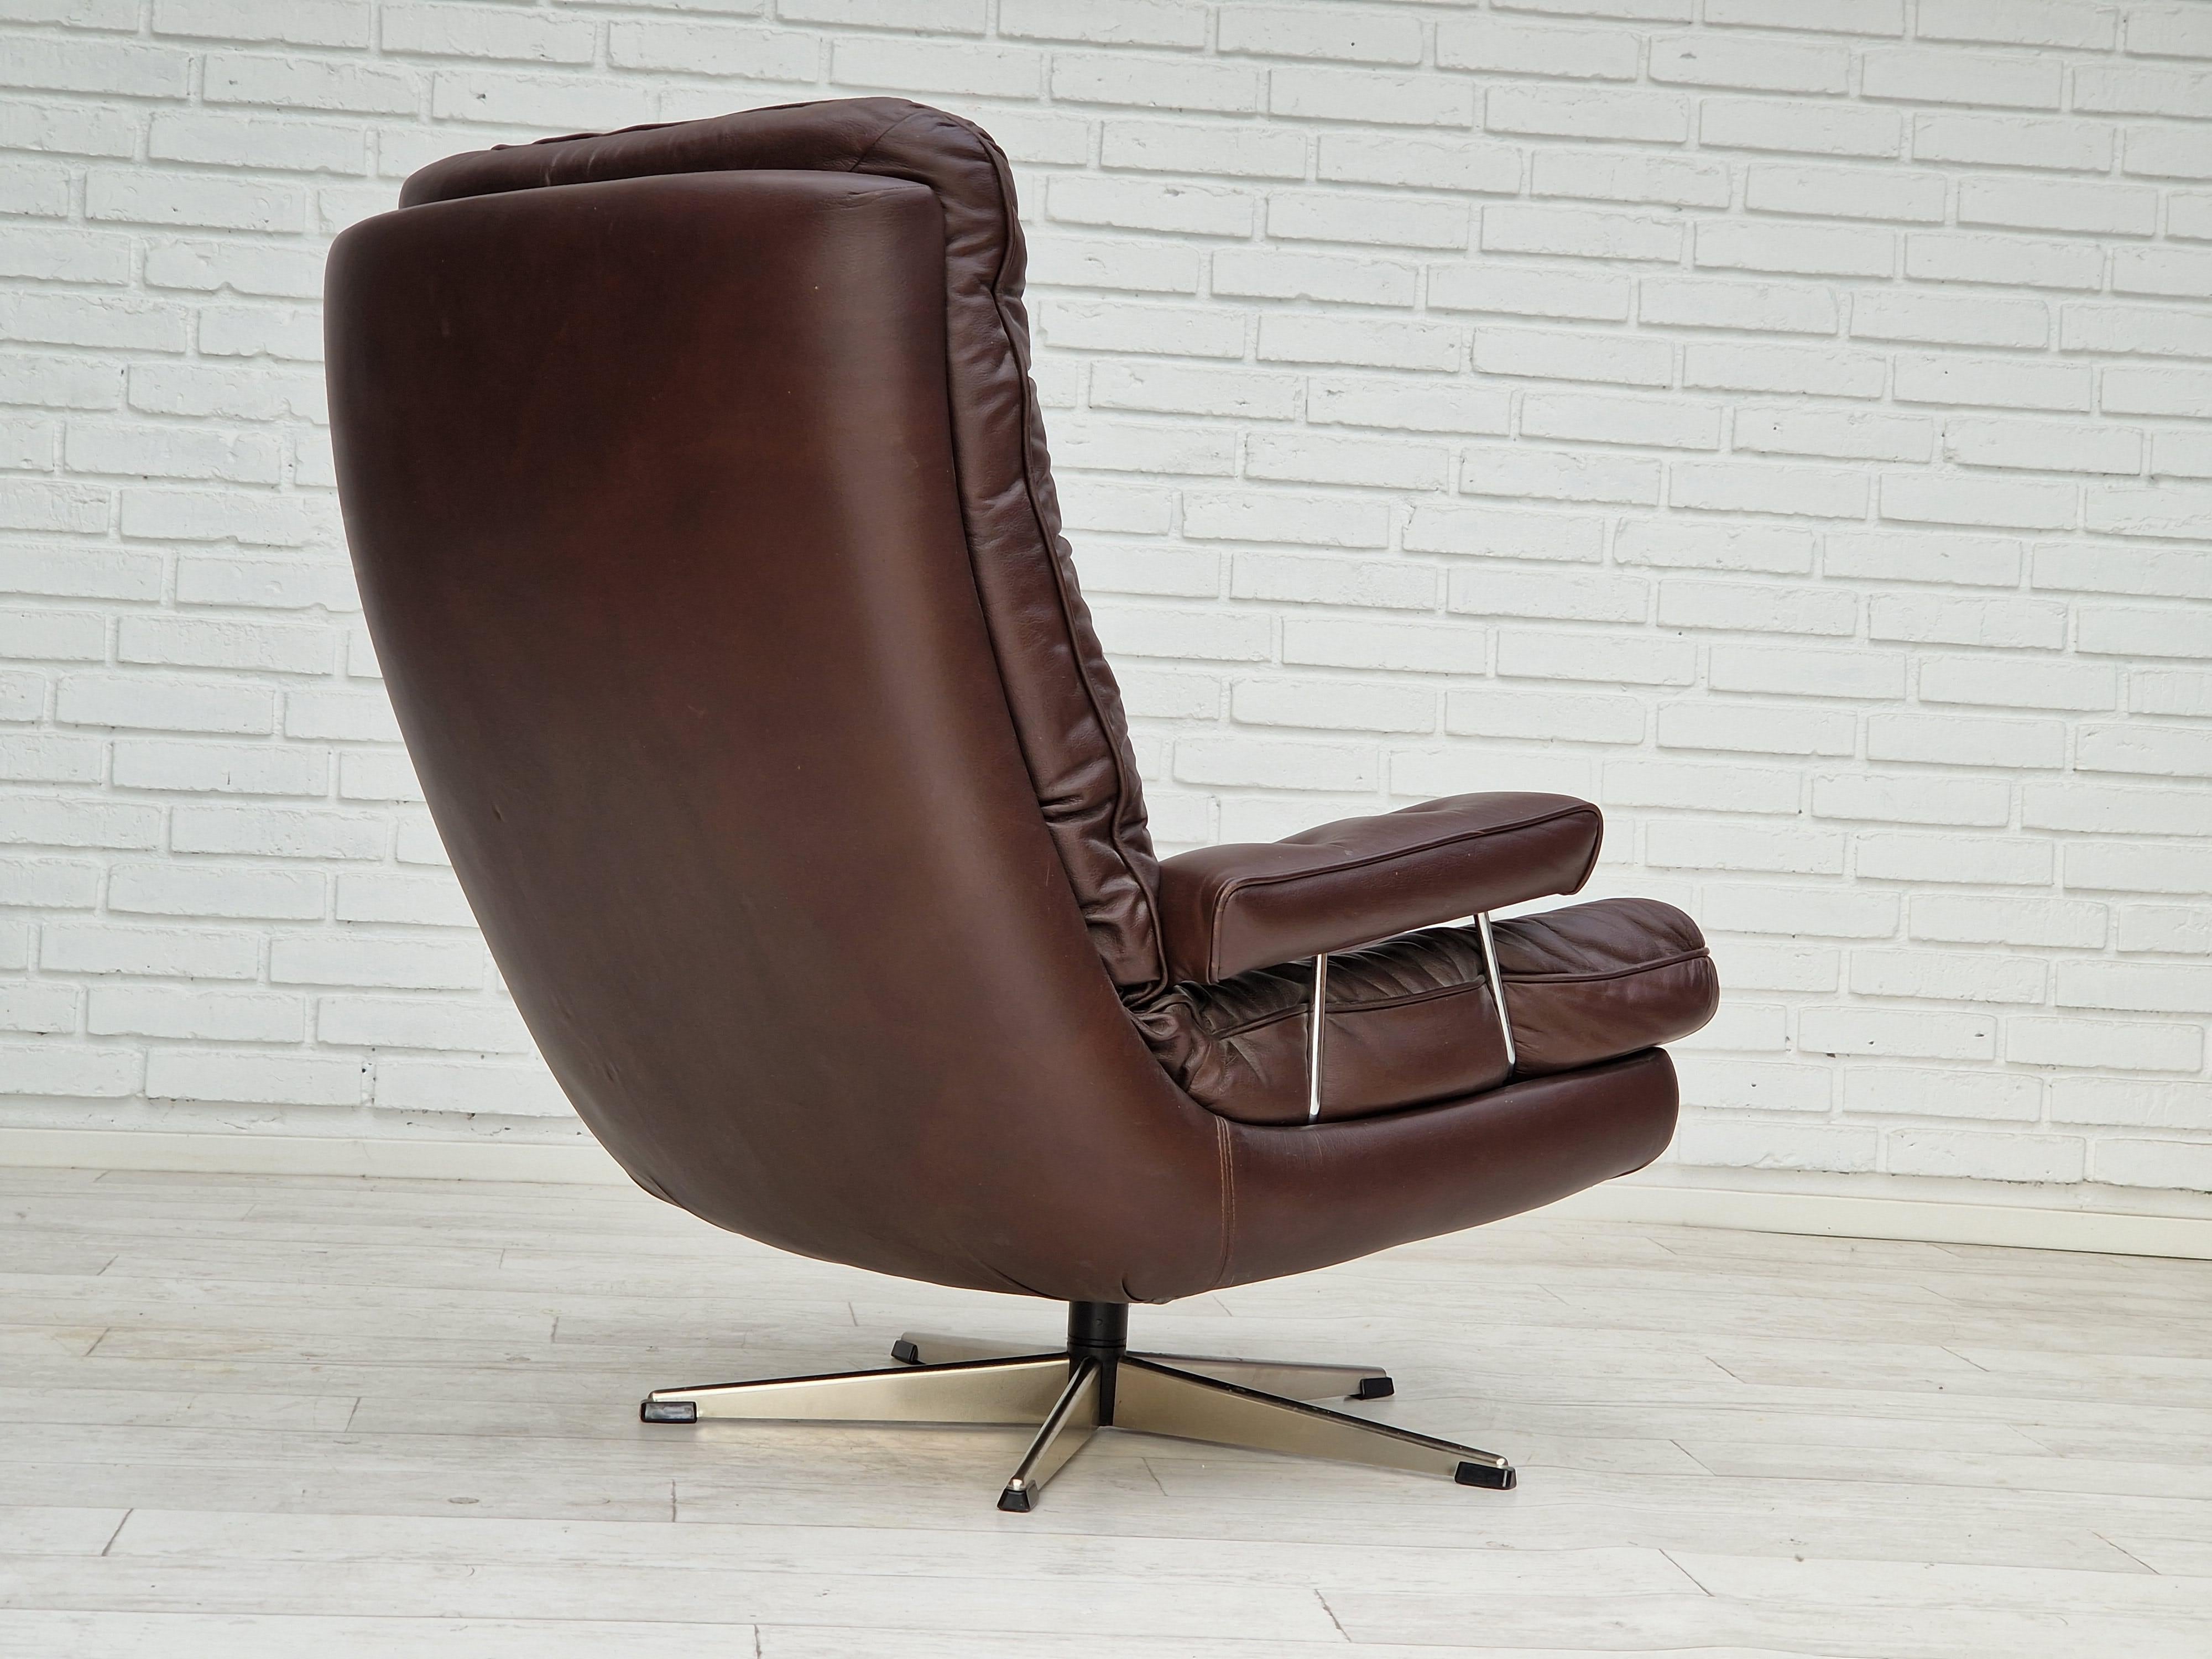 1970s, Vintage Danish Swivel Leather Armchair, Leather, Original Condition 7